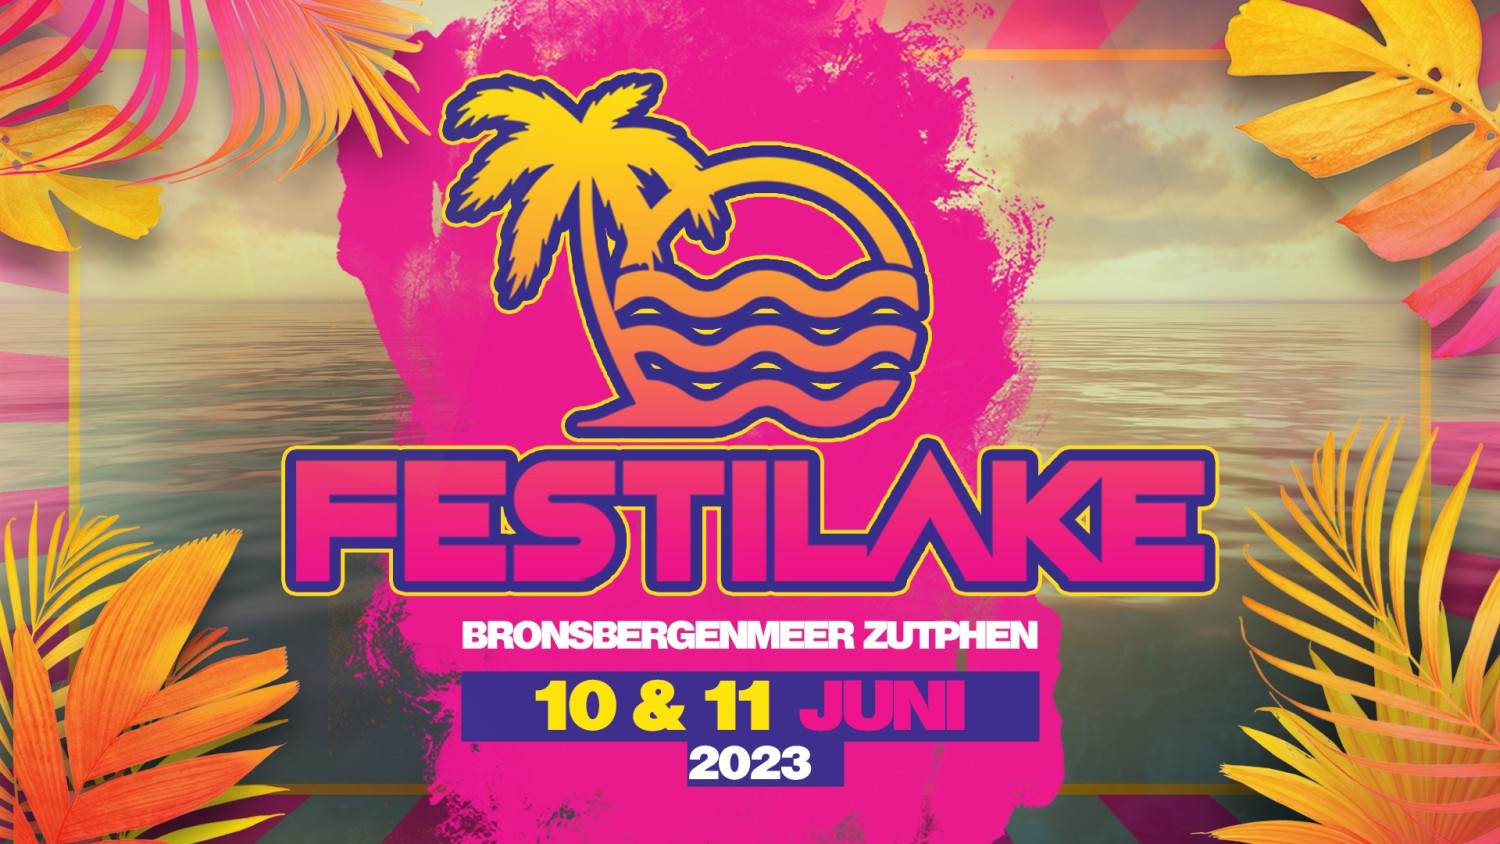 Party nieuws: Het leukste Festival van Gelderland: Festilake 2023